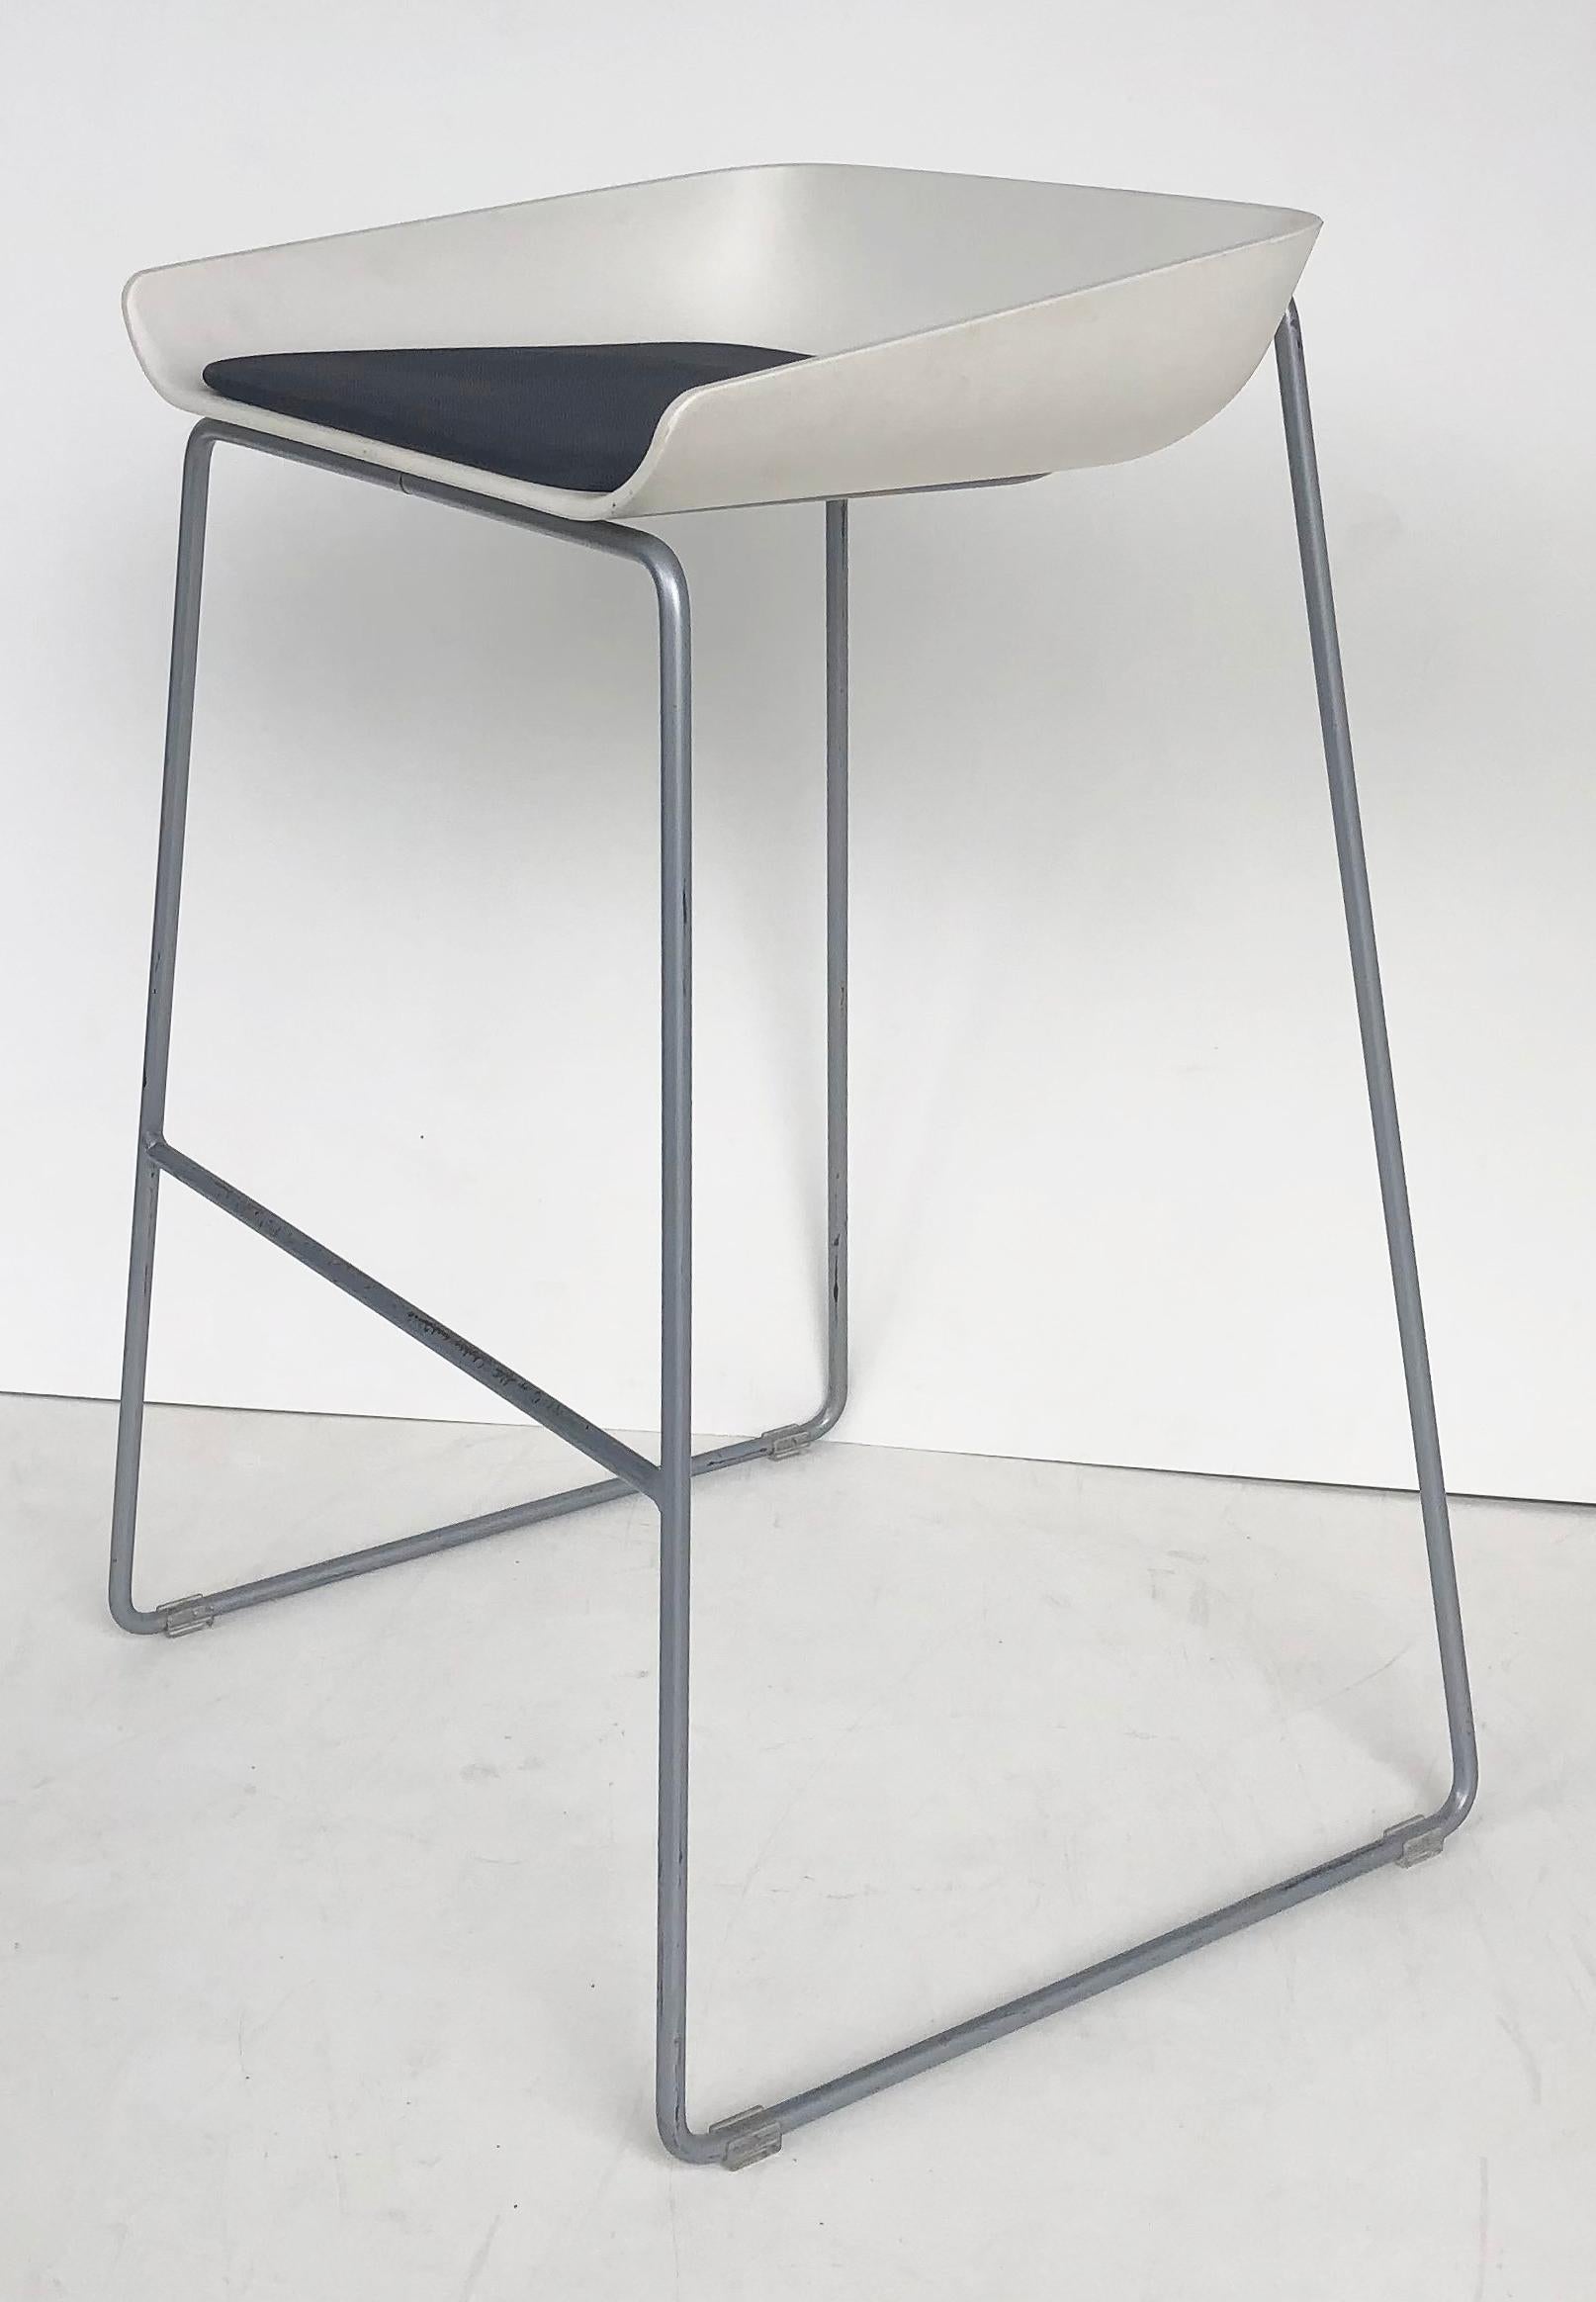 turnstone scoop stool